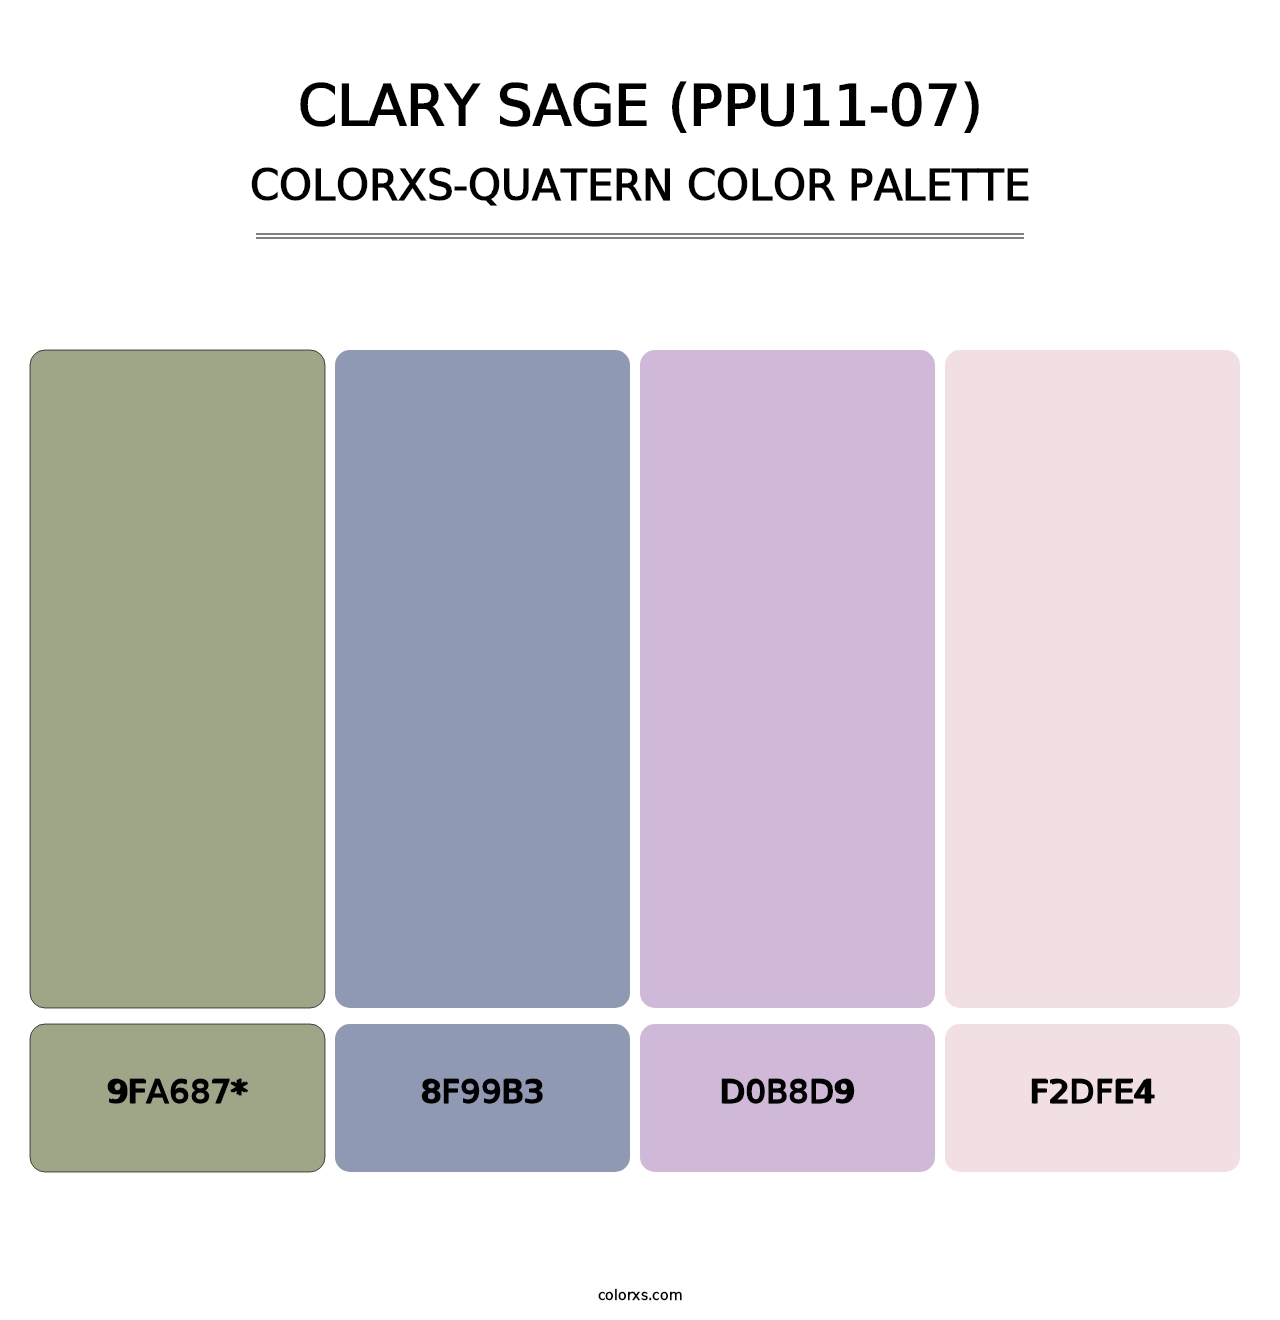 Clary Sage (PPU11-07) - Colorxs Quatern Palette